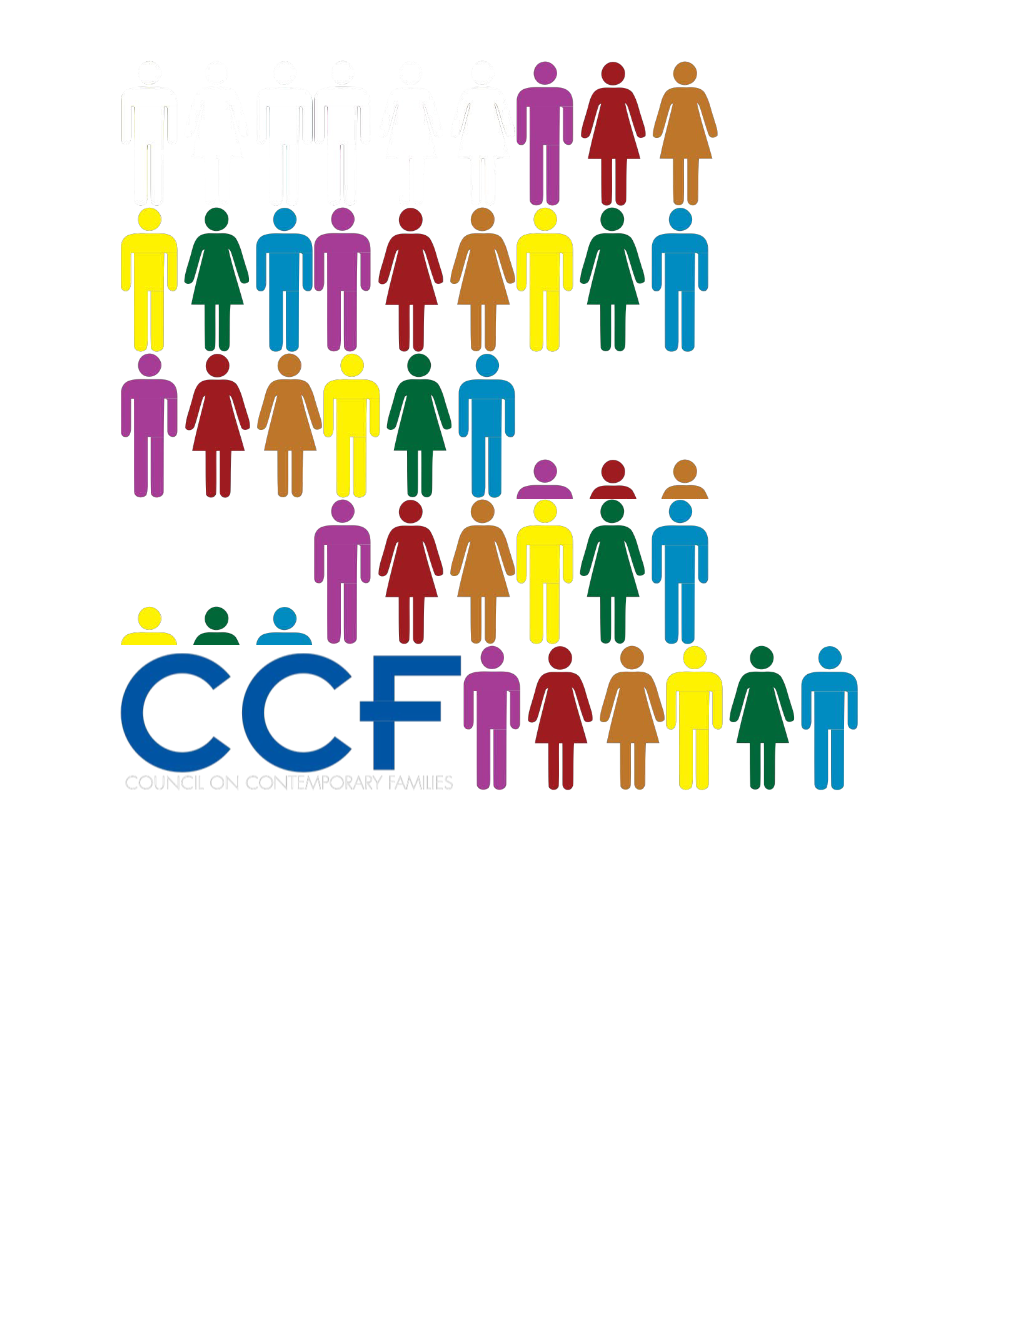 CCF Gender Revolution Symposium